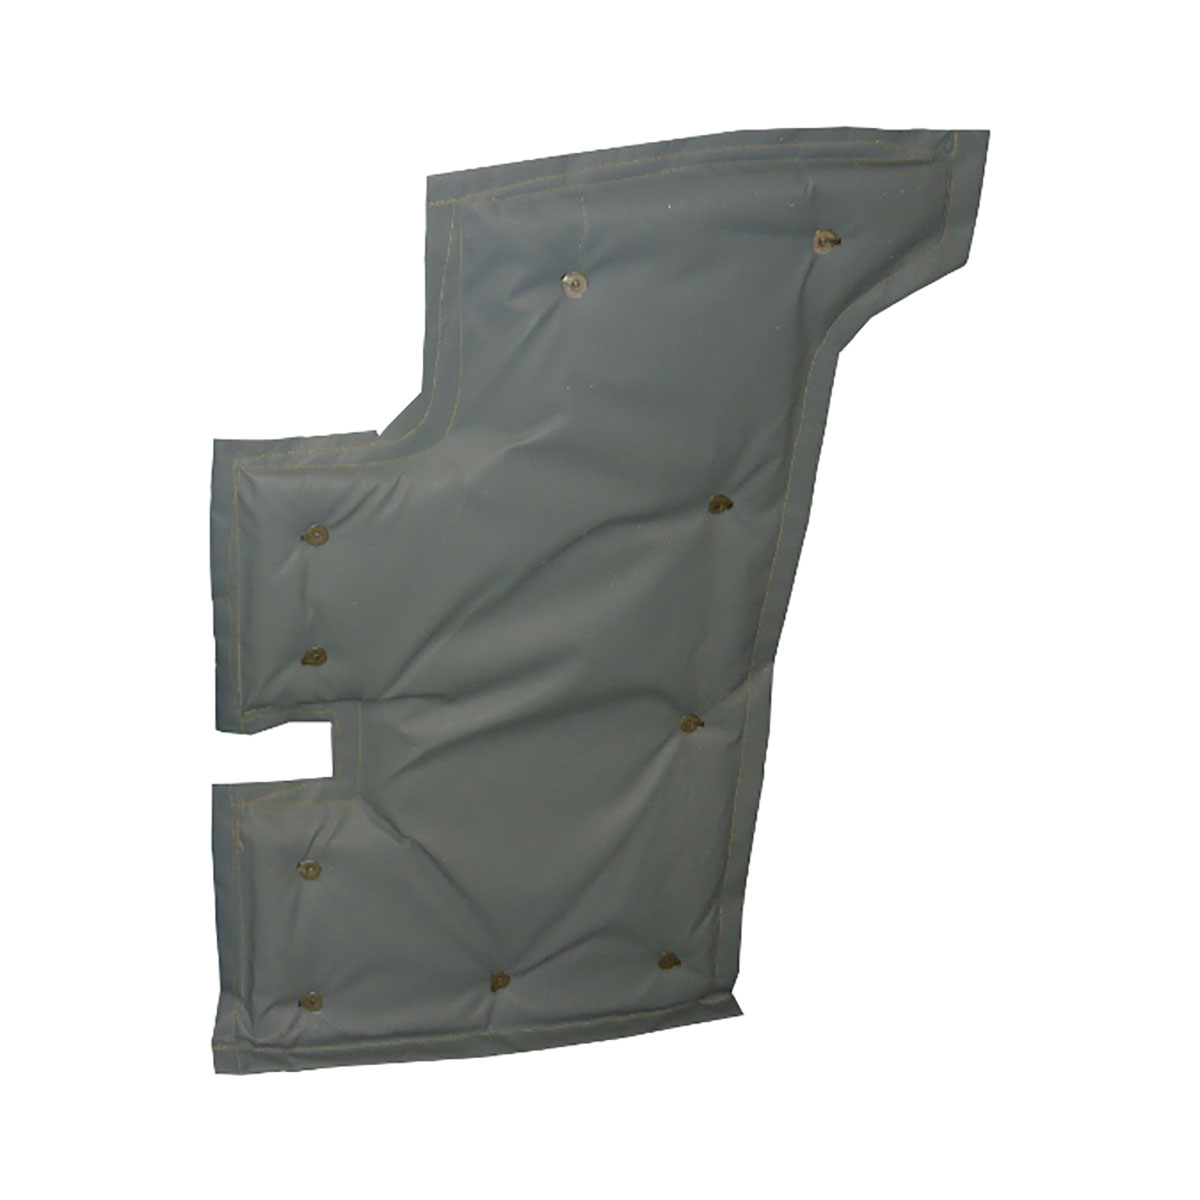 Grey Silicone Coated Fibreglass Cloth Insulation Pad